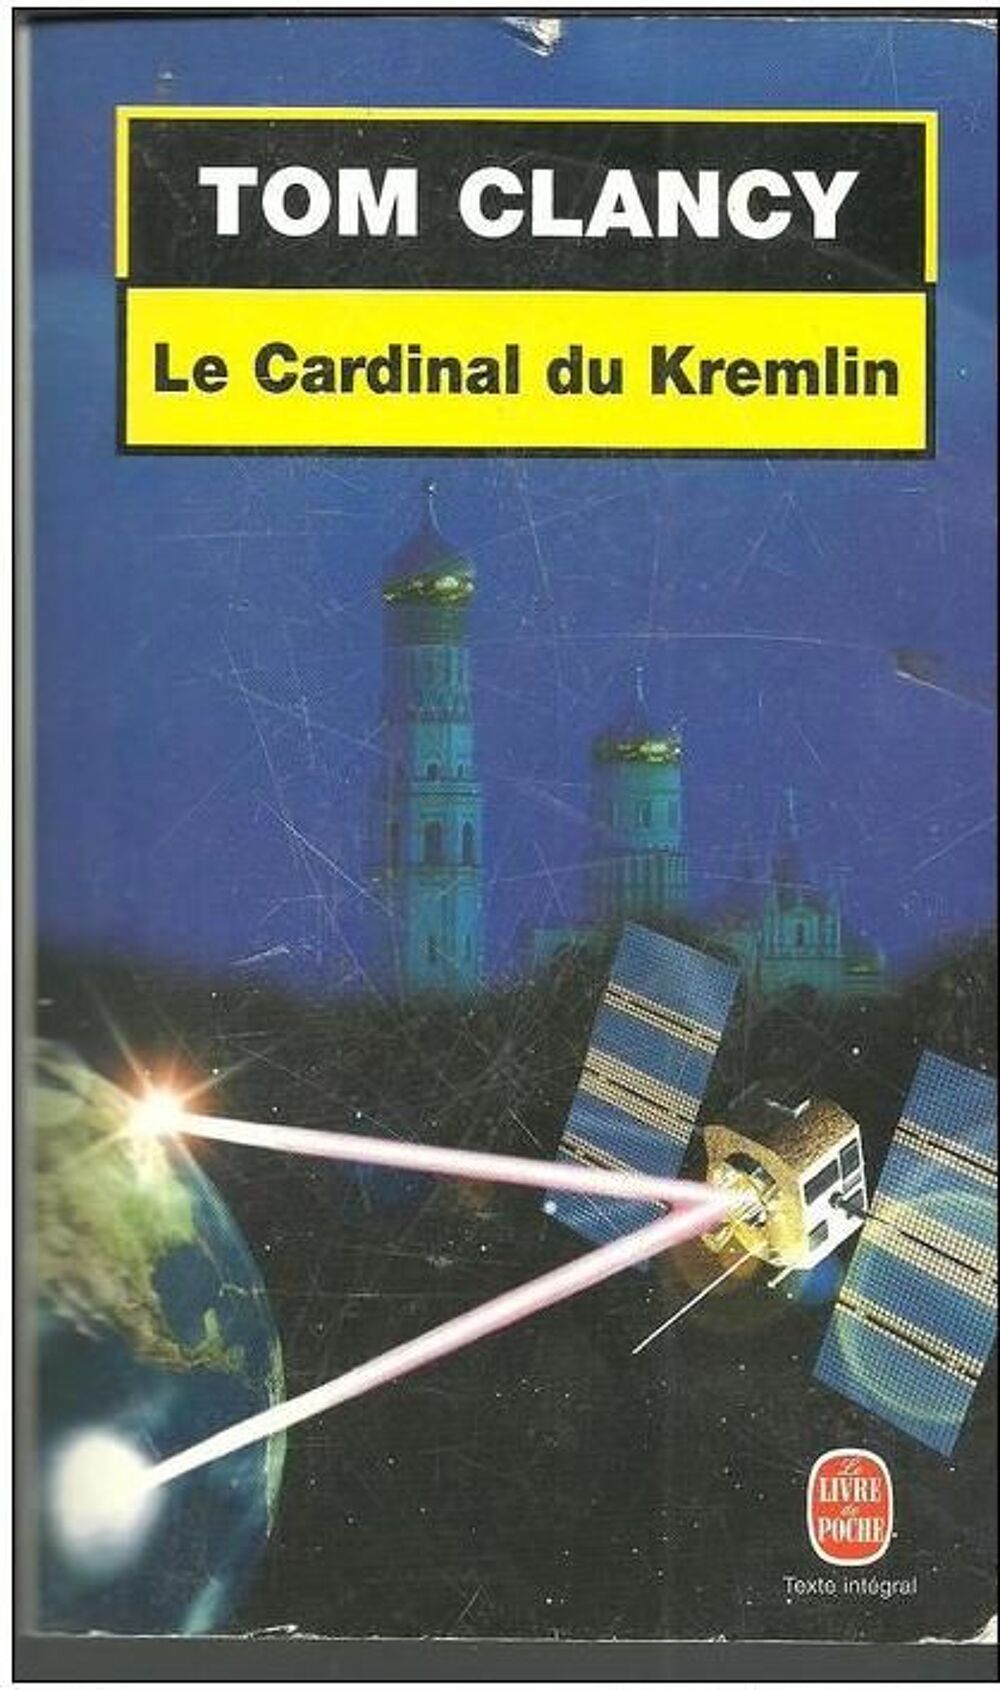 Le Cardinal du Kremlin (Tom Clancy) Livres et BD